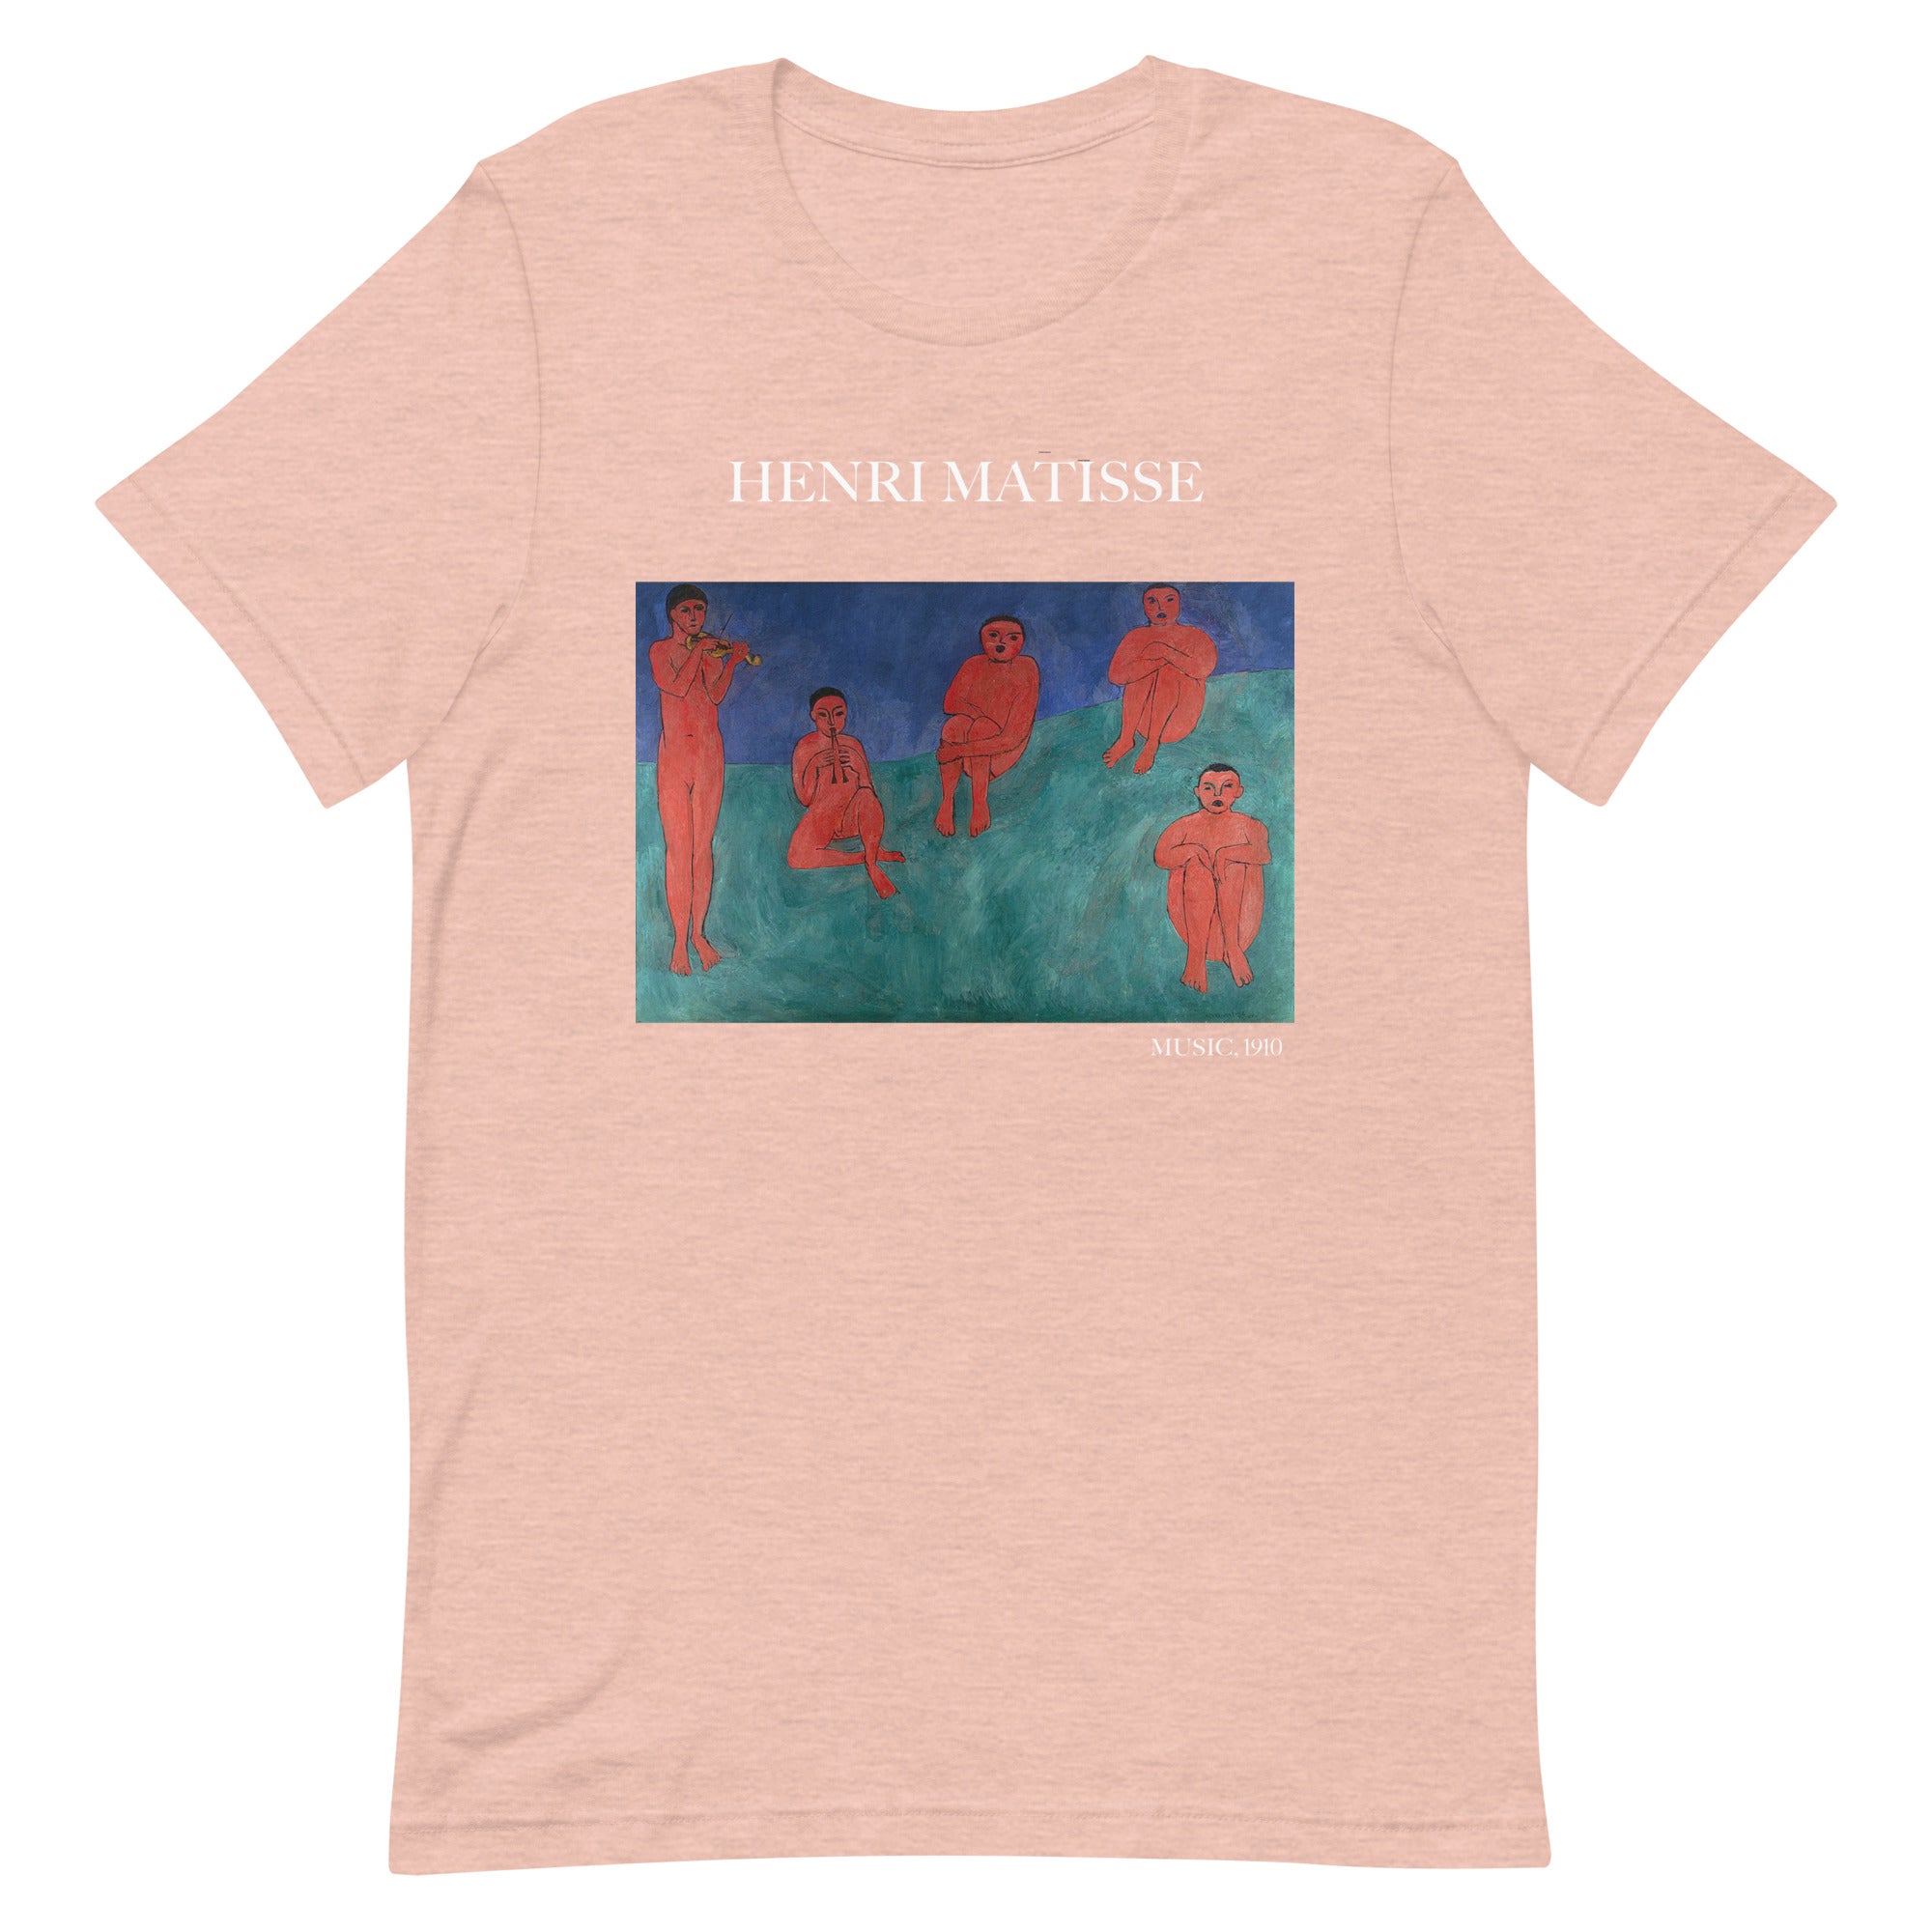 Henri Matisse 'Music' Famous Painting T-Shirt | Unisex Classic Art Tee